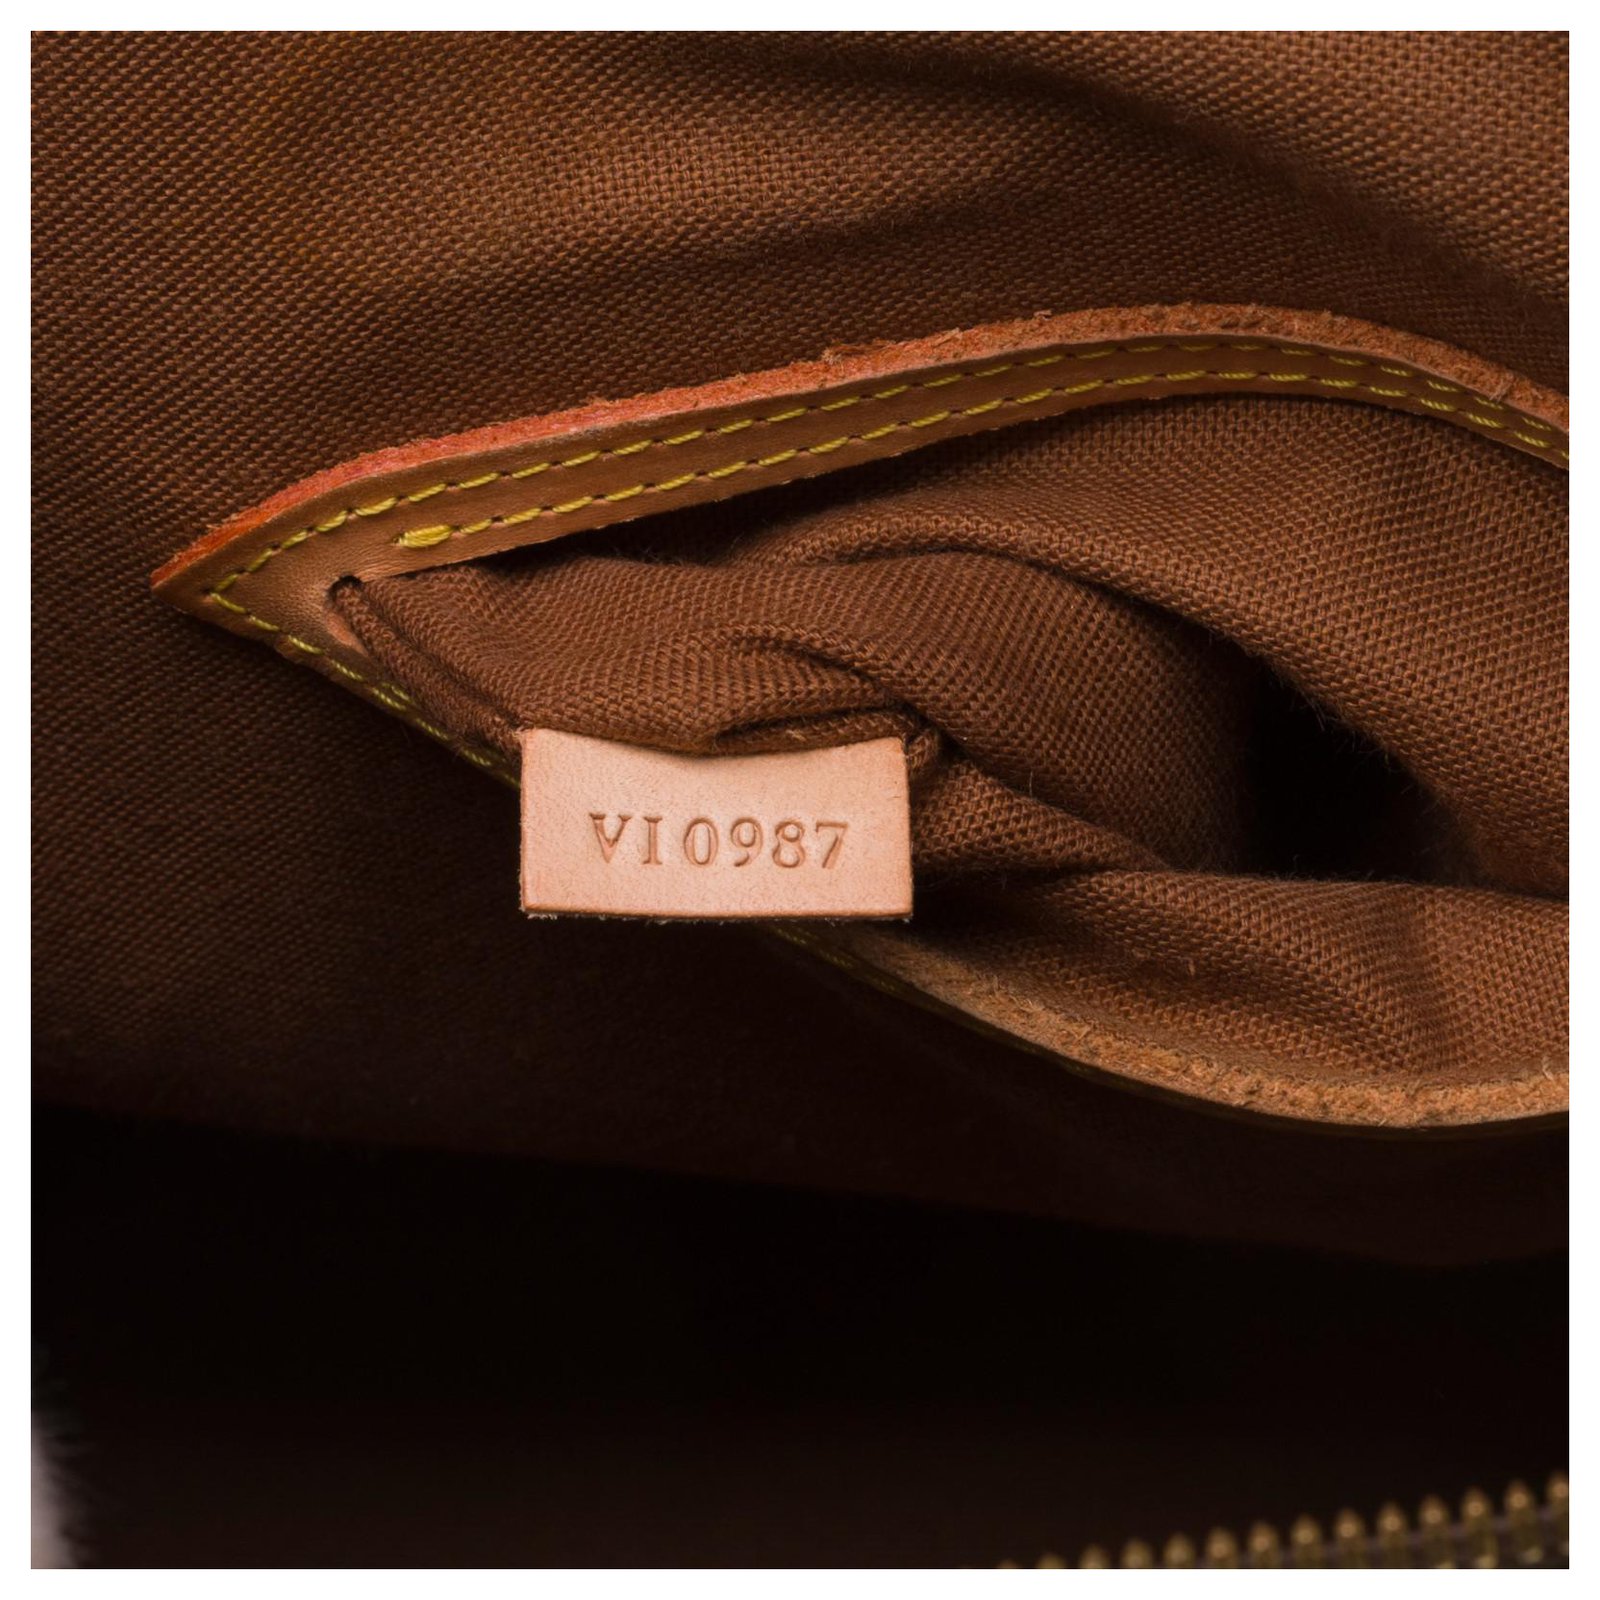 Splendid Louis Vuitton Alma bag in monogram canvas and natural